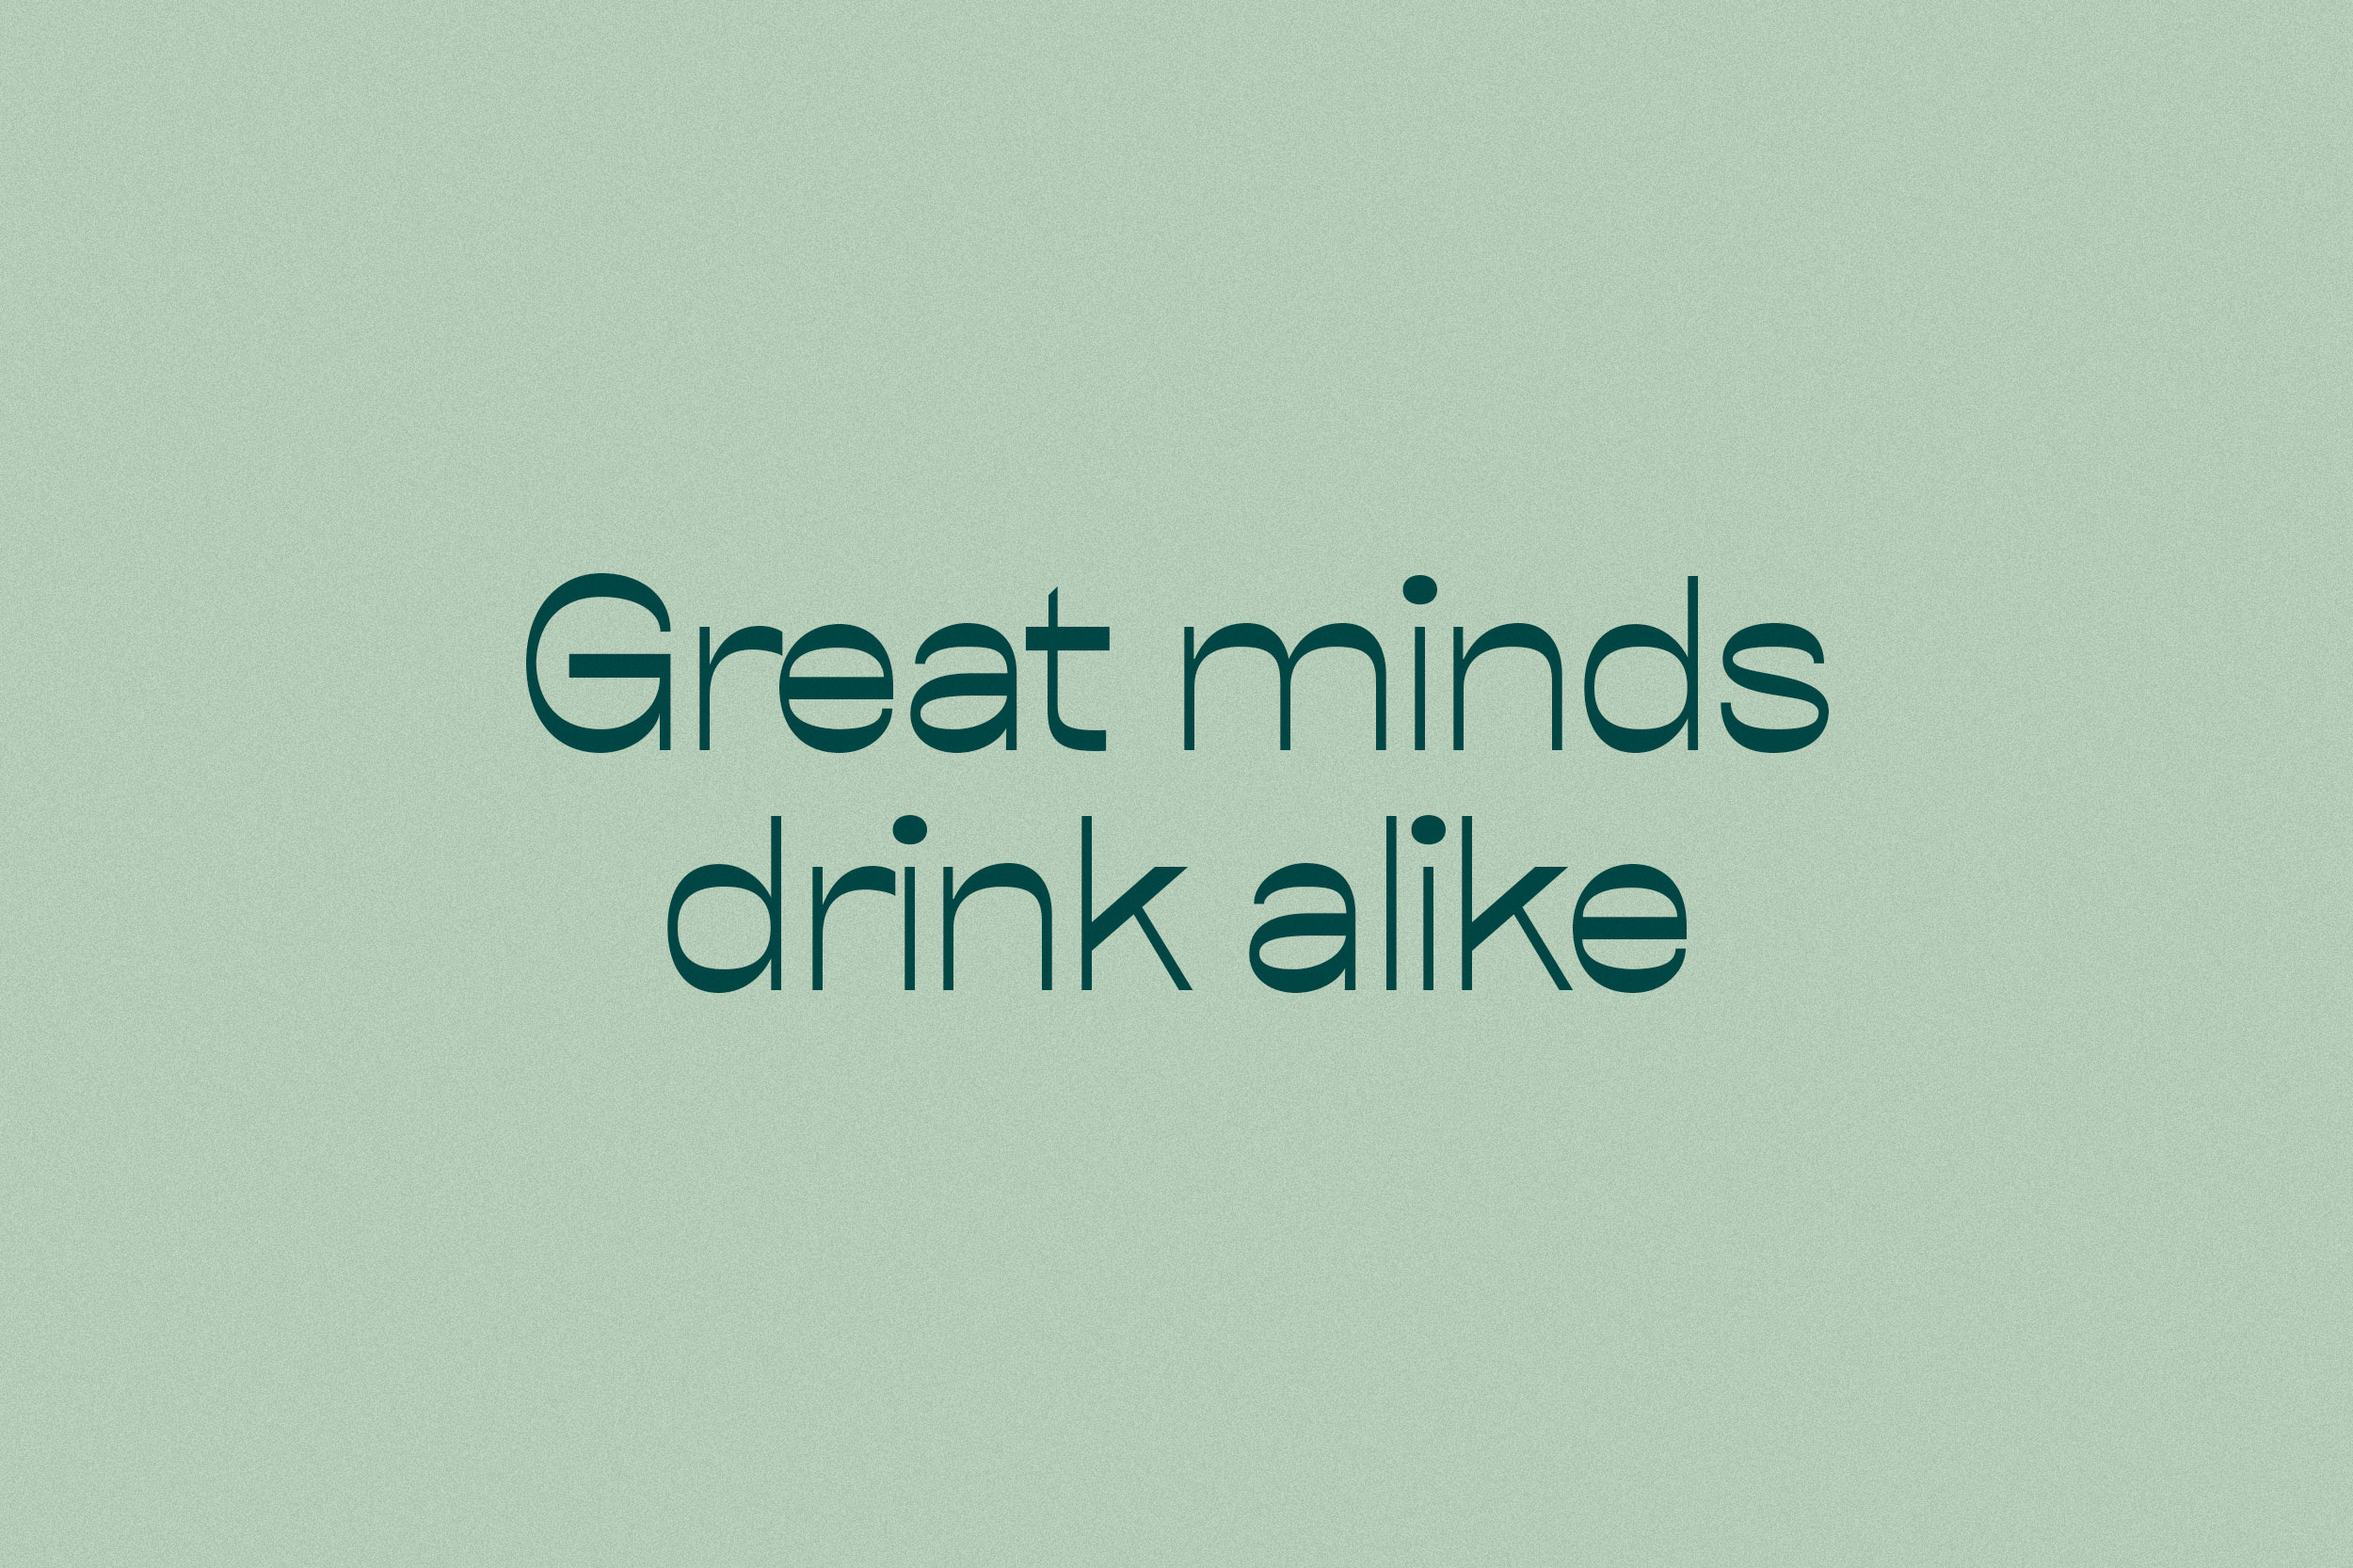 Great minds drink alike